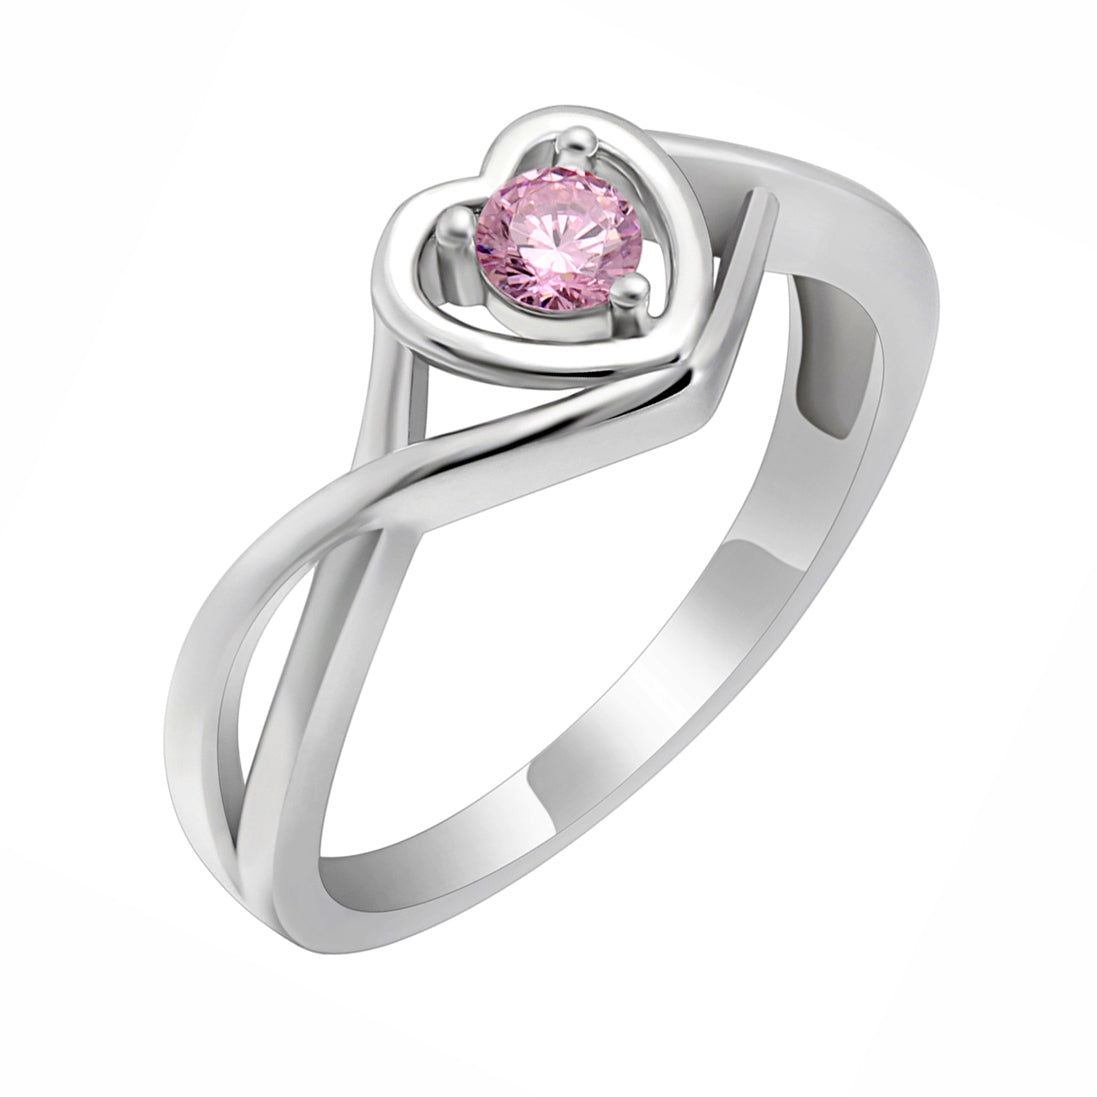 Christine Promise Ring Heart Engagement Women Silver Cz Ginger Lyne - October Pink,11